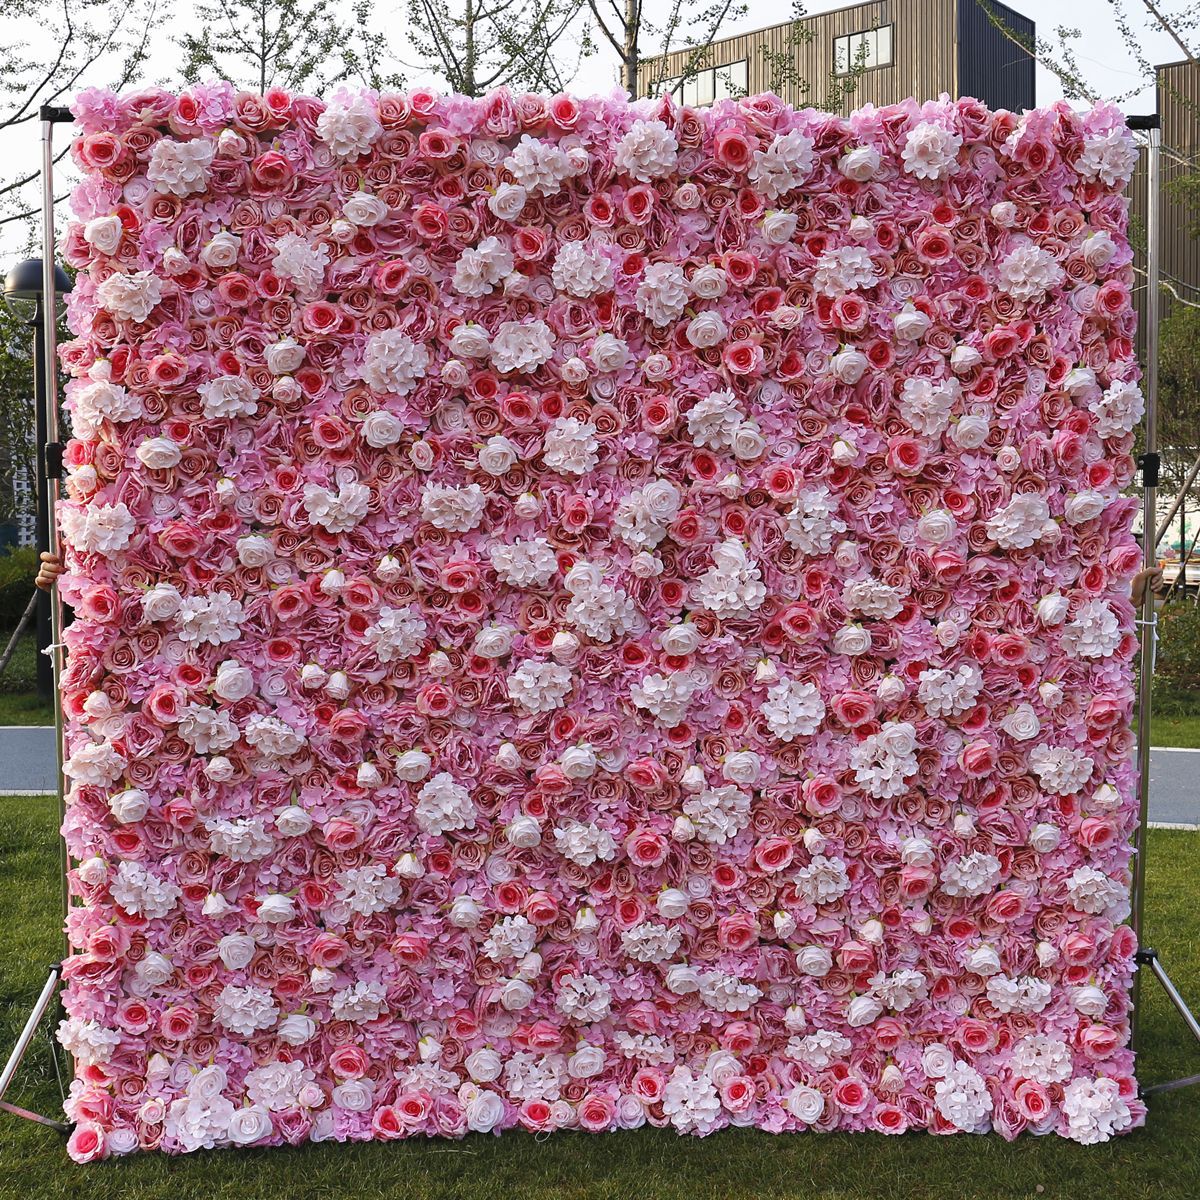  Fond de tissu de mariage Simulation Fleur Mur Fond Mur Film Studio Fond Soie Fleur Rangée Plante Mur Fleur Mur 